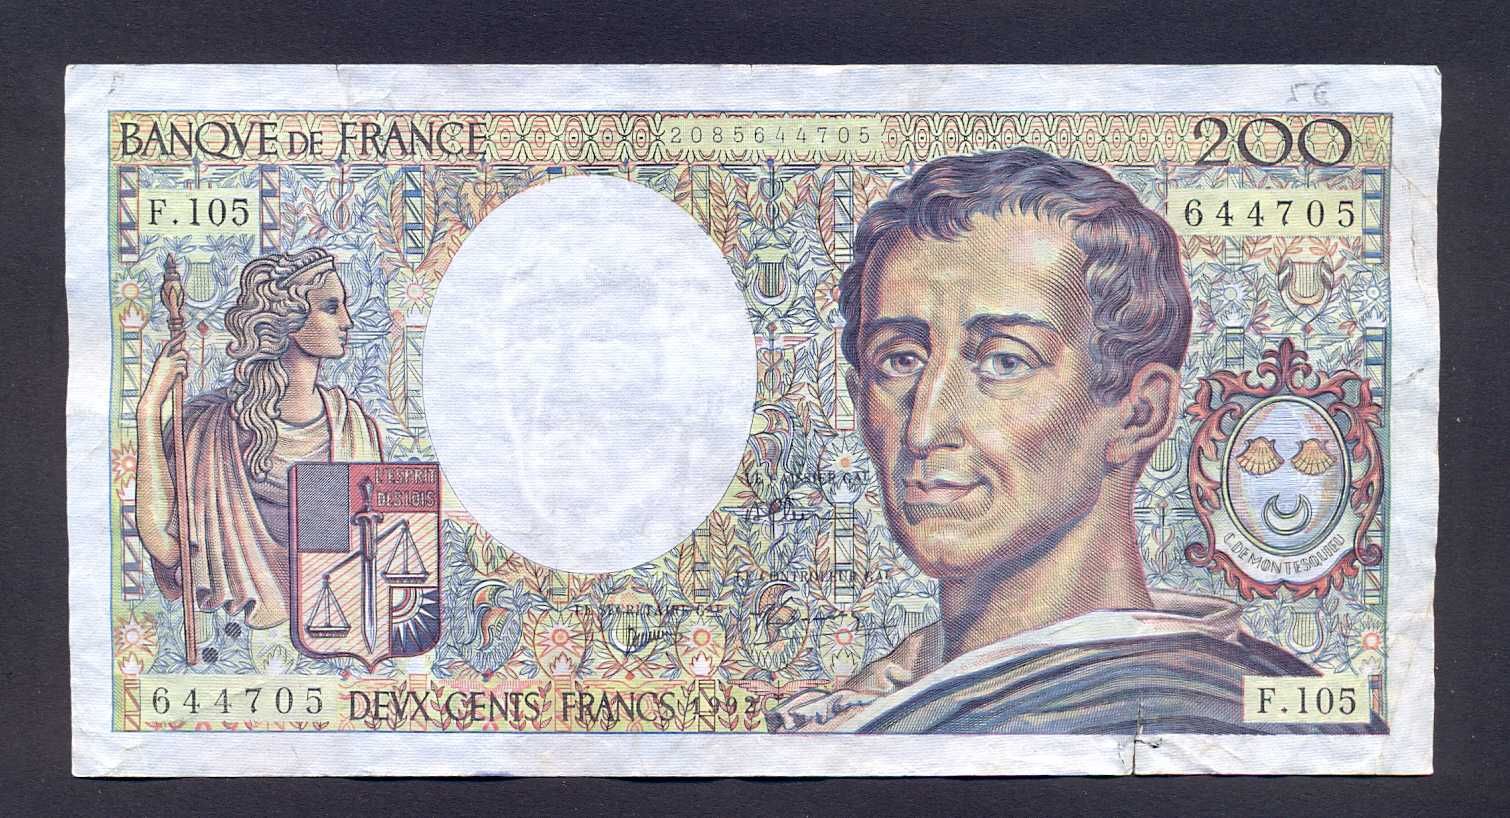 Banknot Francja 200 Franków z 1992 r